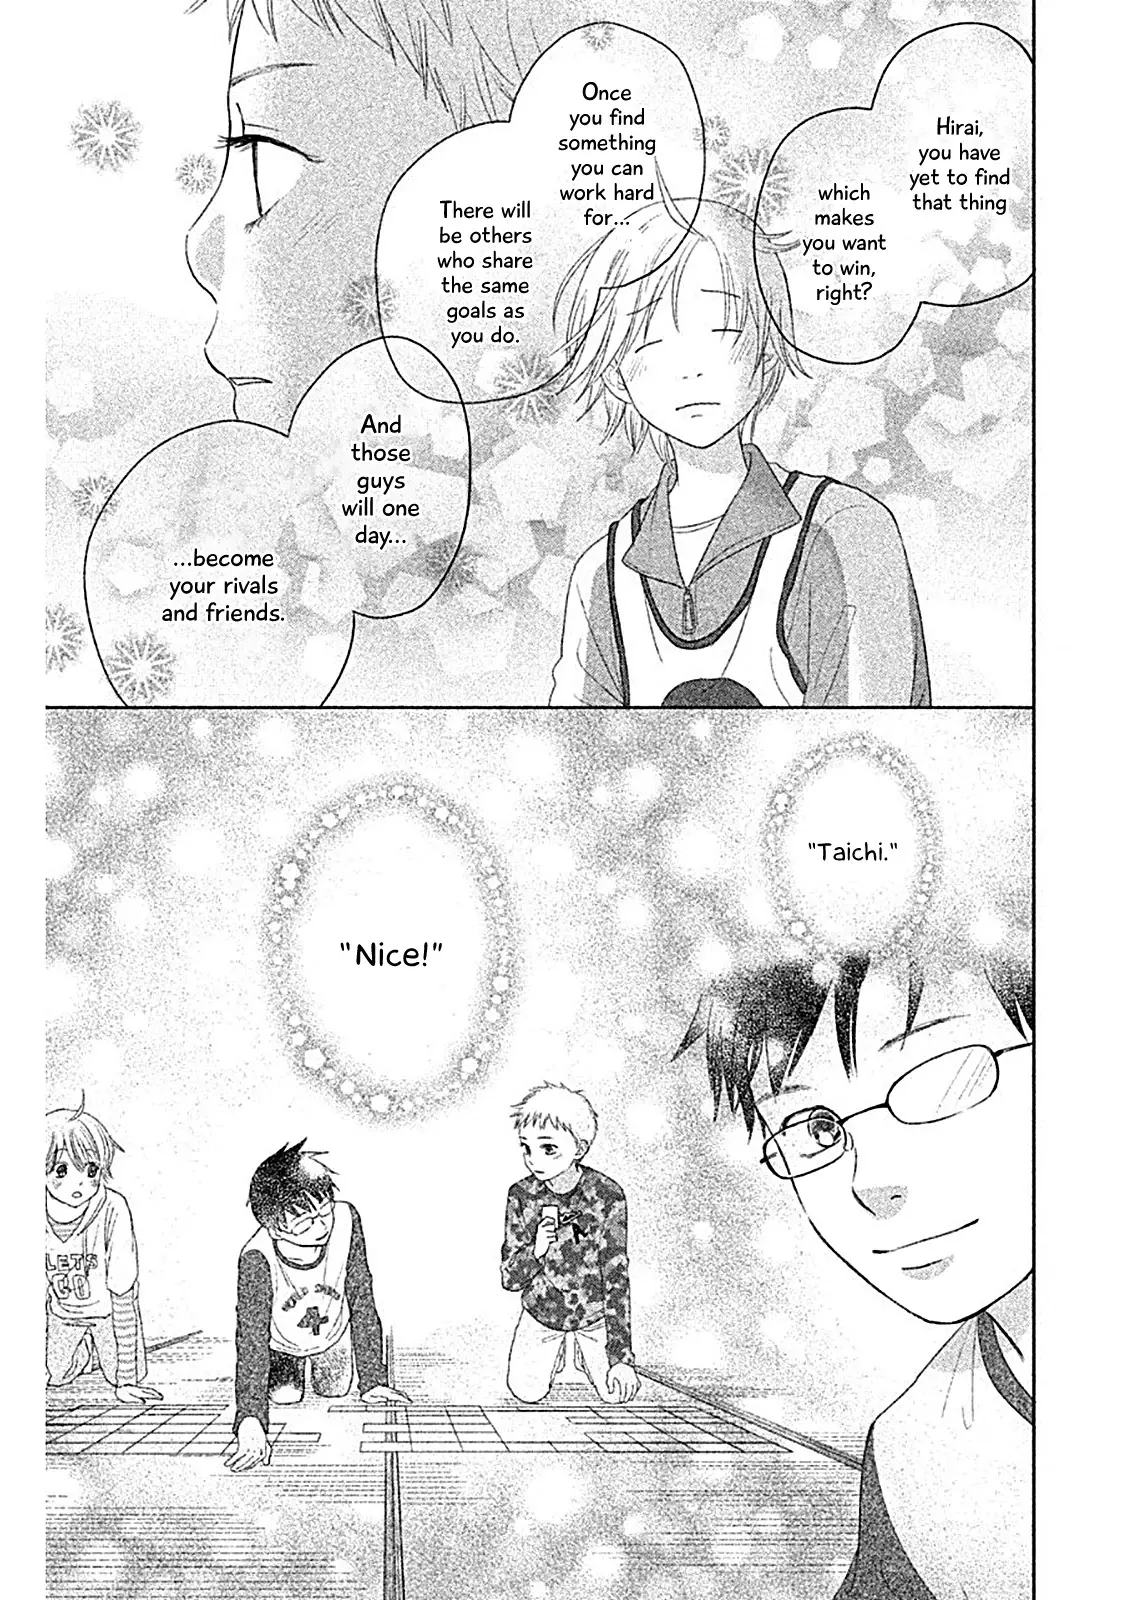 Chihayafuru: Middle School Arc - 4 page 20